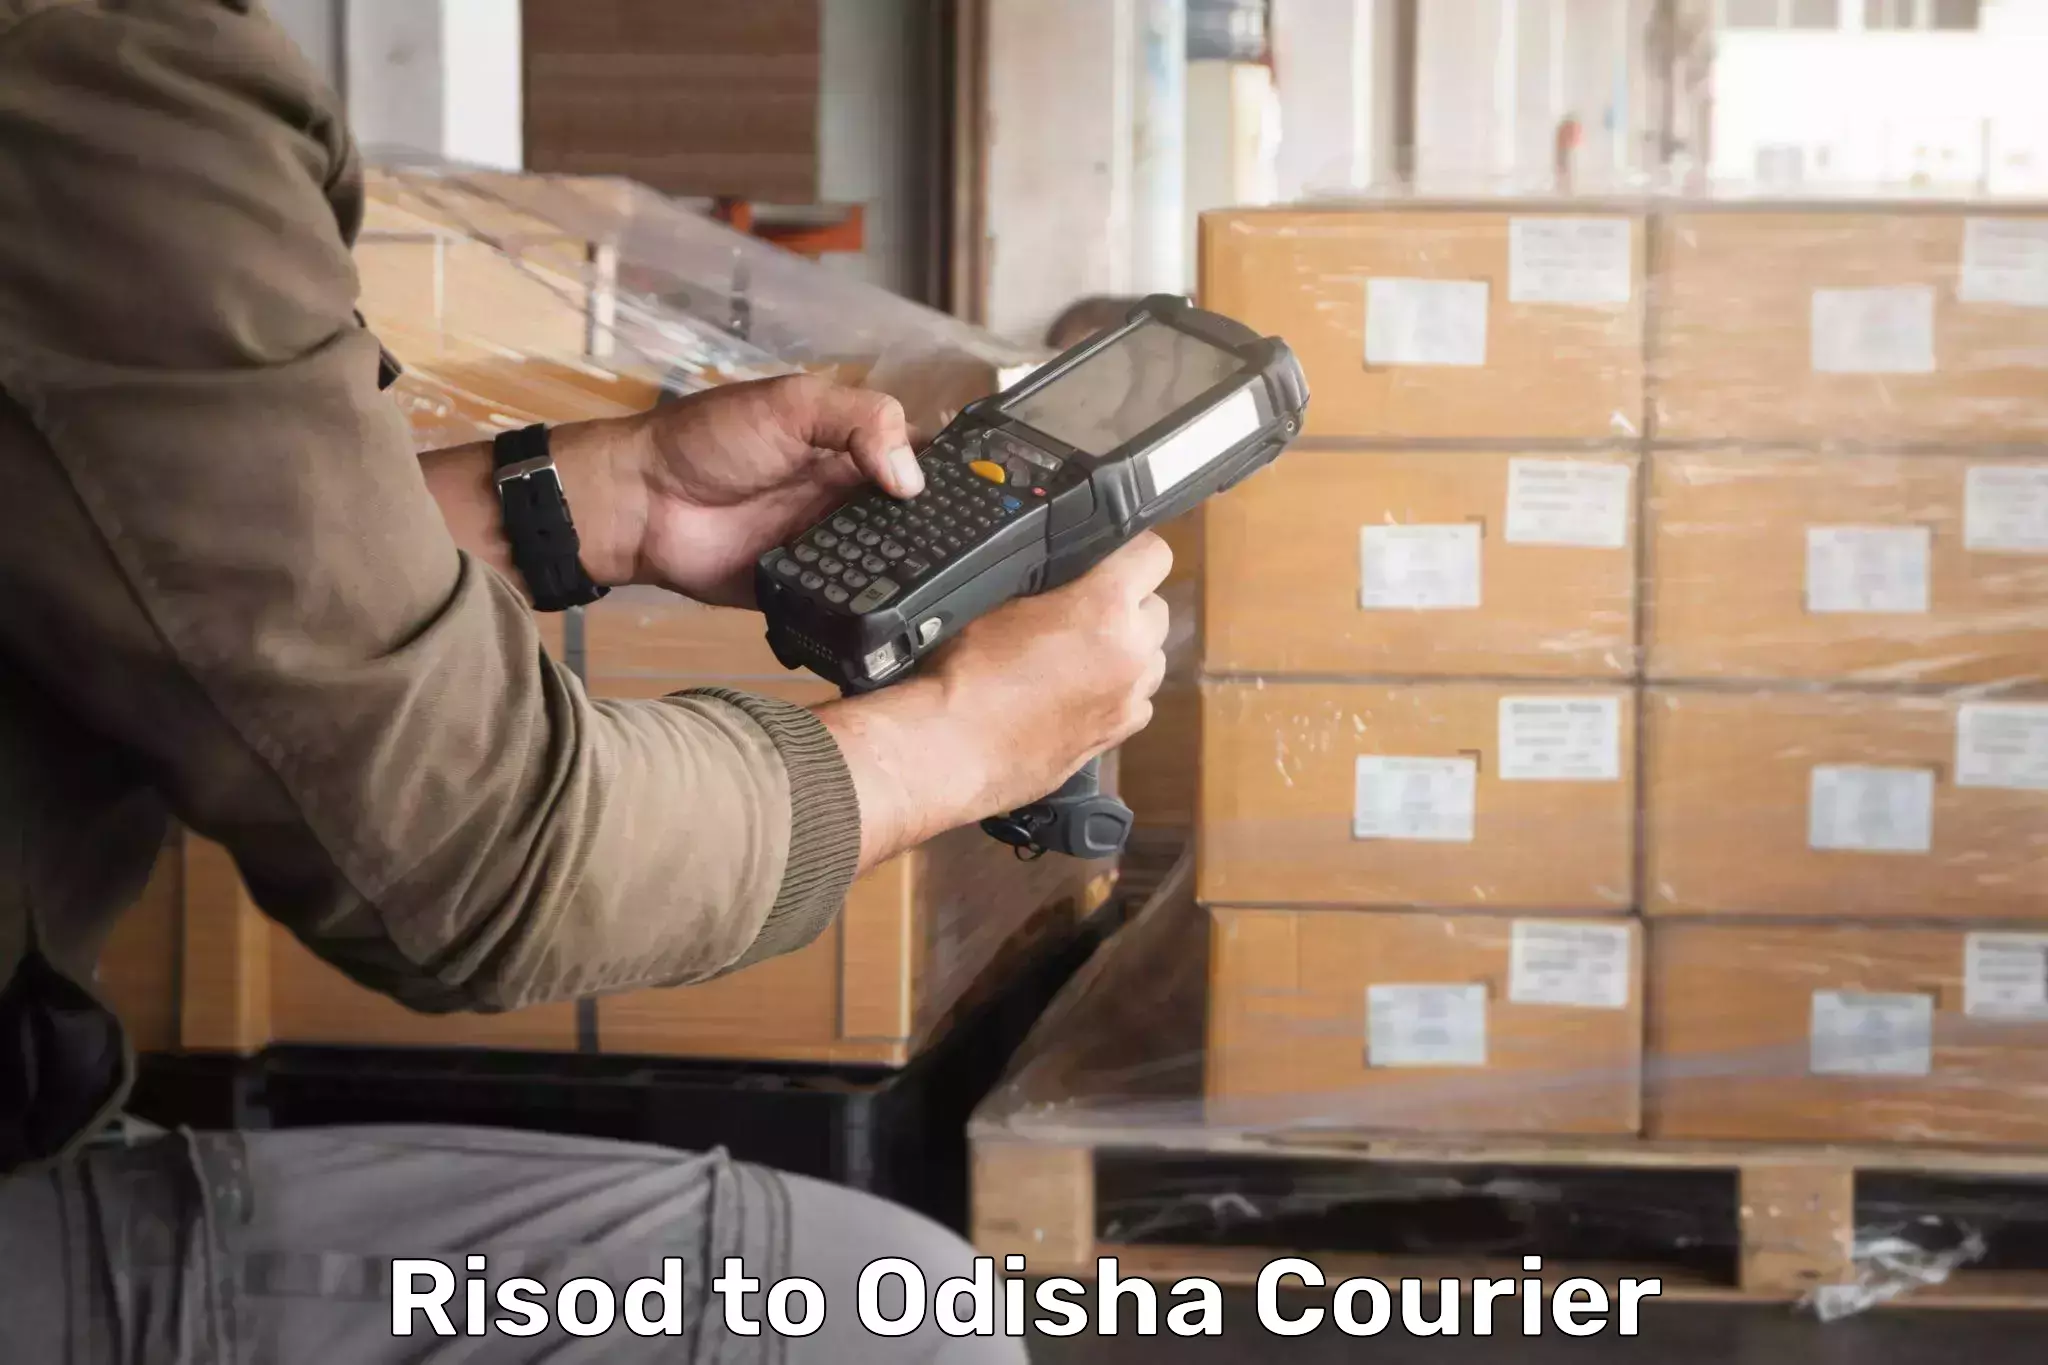 Courier service comparison Risod to Paikana